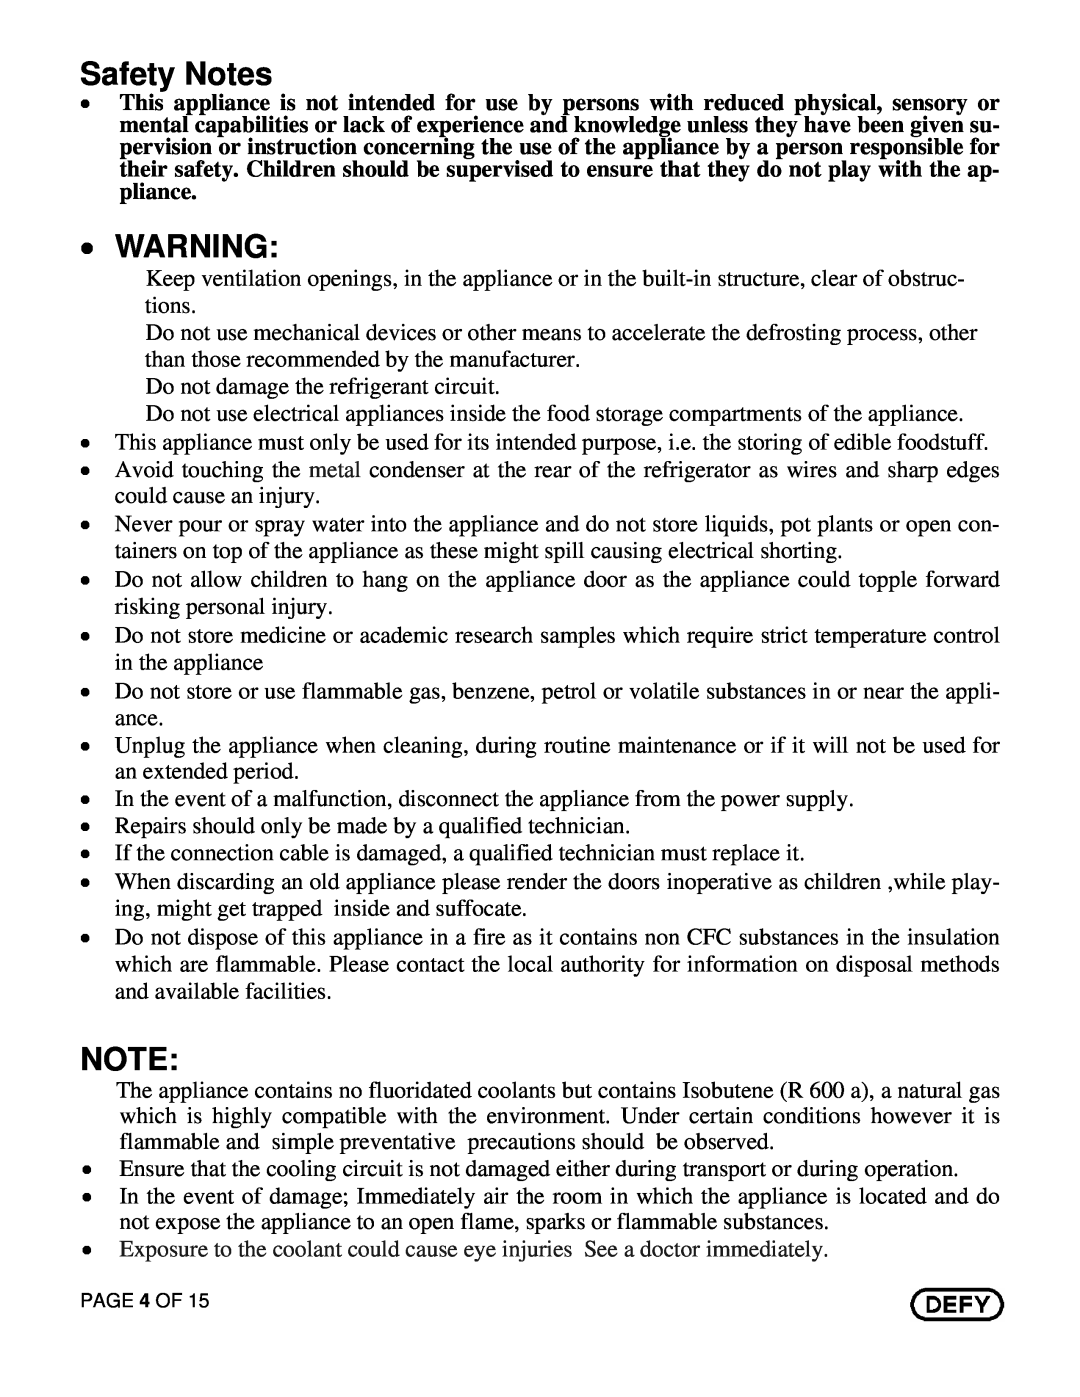 Defy Appliances C375 owner manual Safety Notes, ∙ Warning 